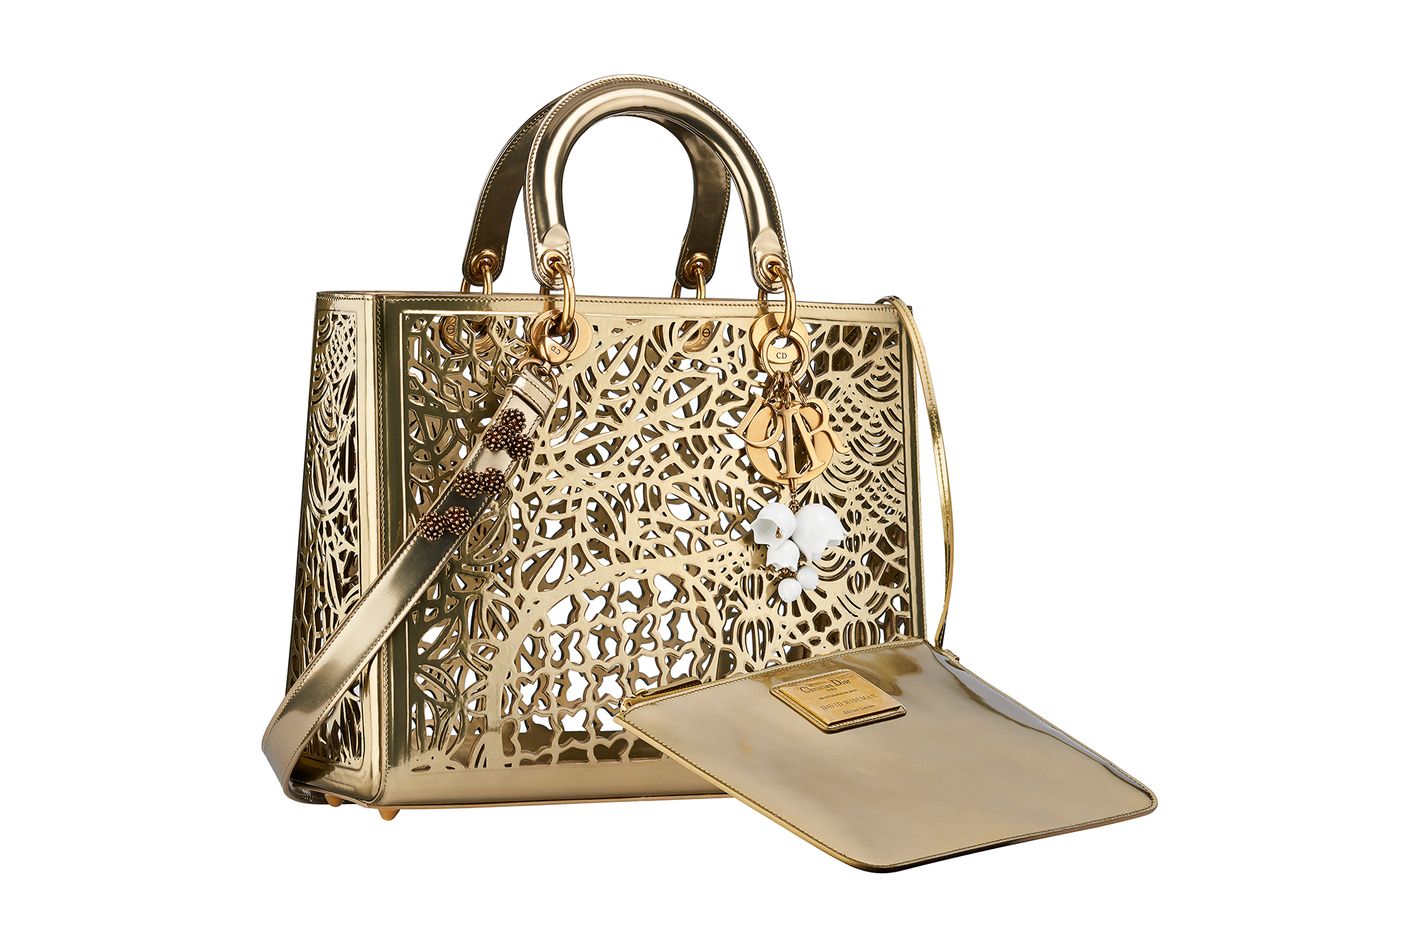 Dior Launches Dior Lady Art Limited-Edition Handbags – WWD